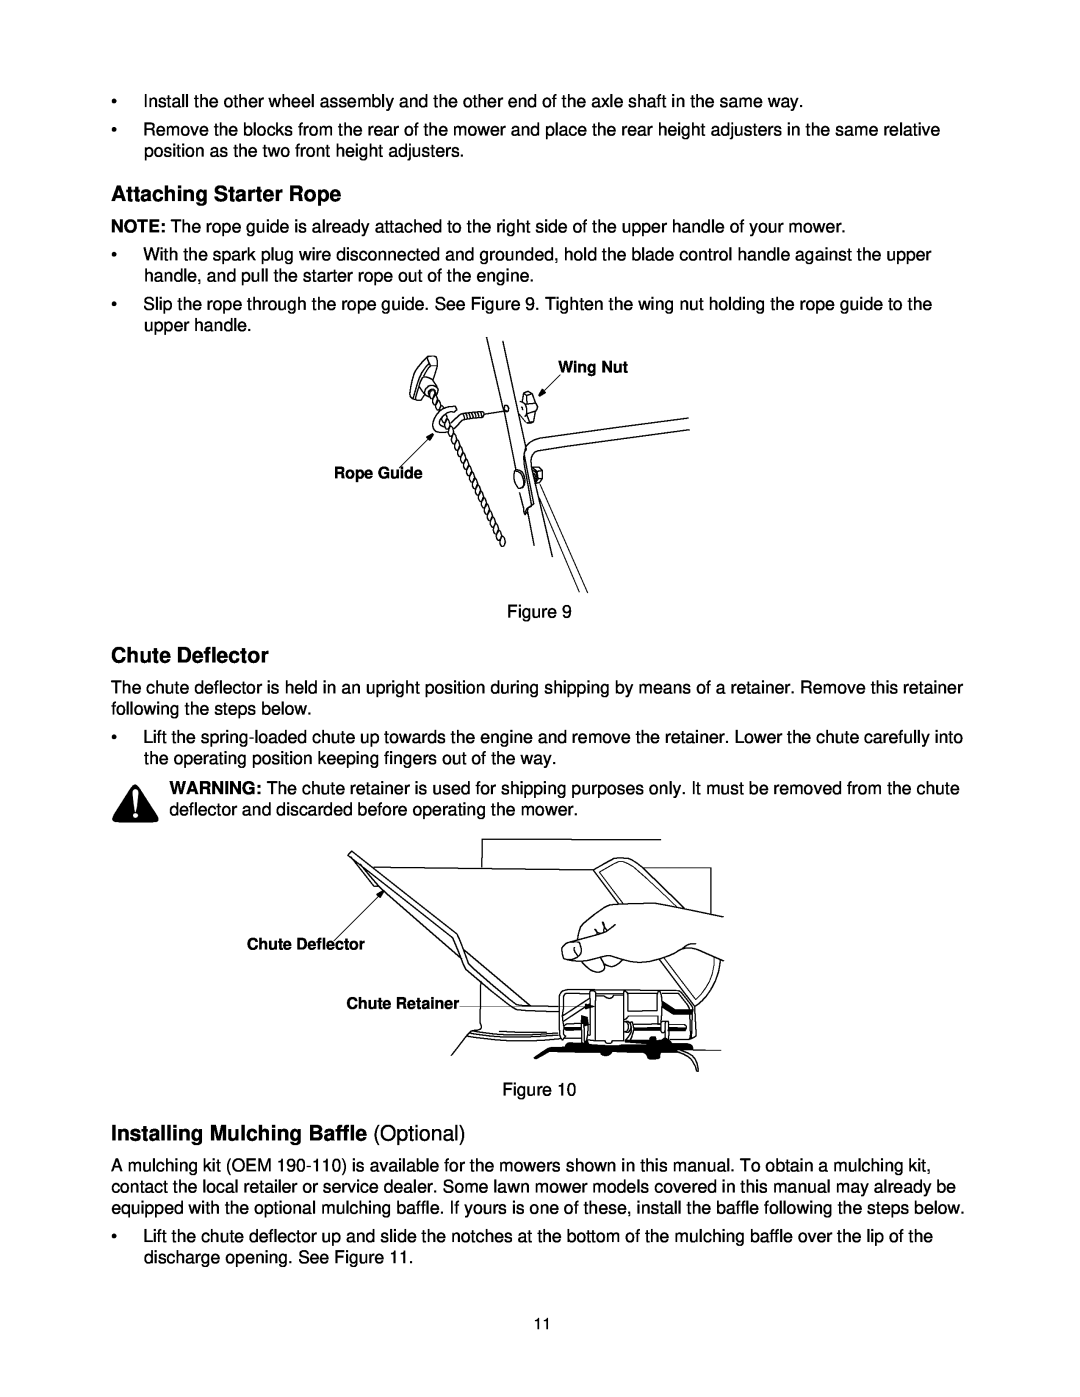 Yard Machines 580 Series manual Attaching Starter Rope, Chute Deflector, Installing Mulching Baffle Optional 